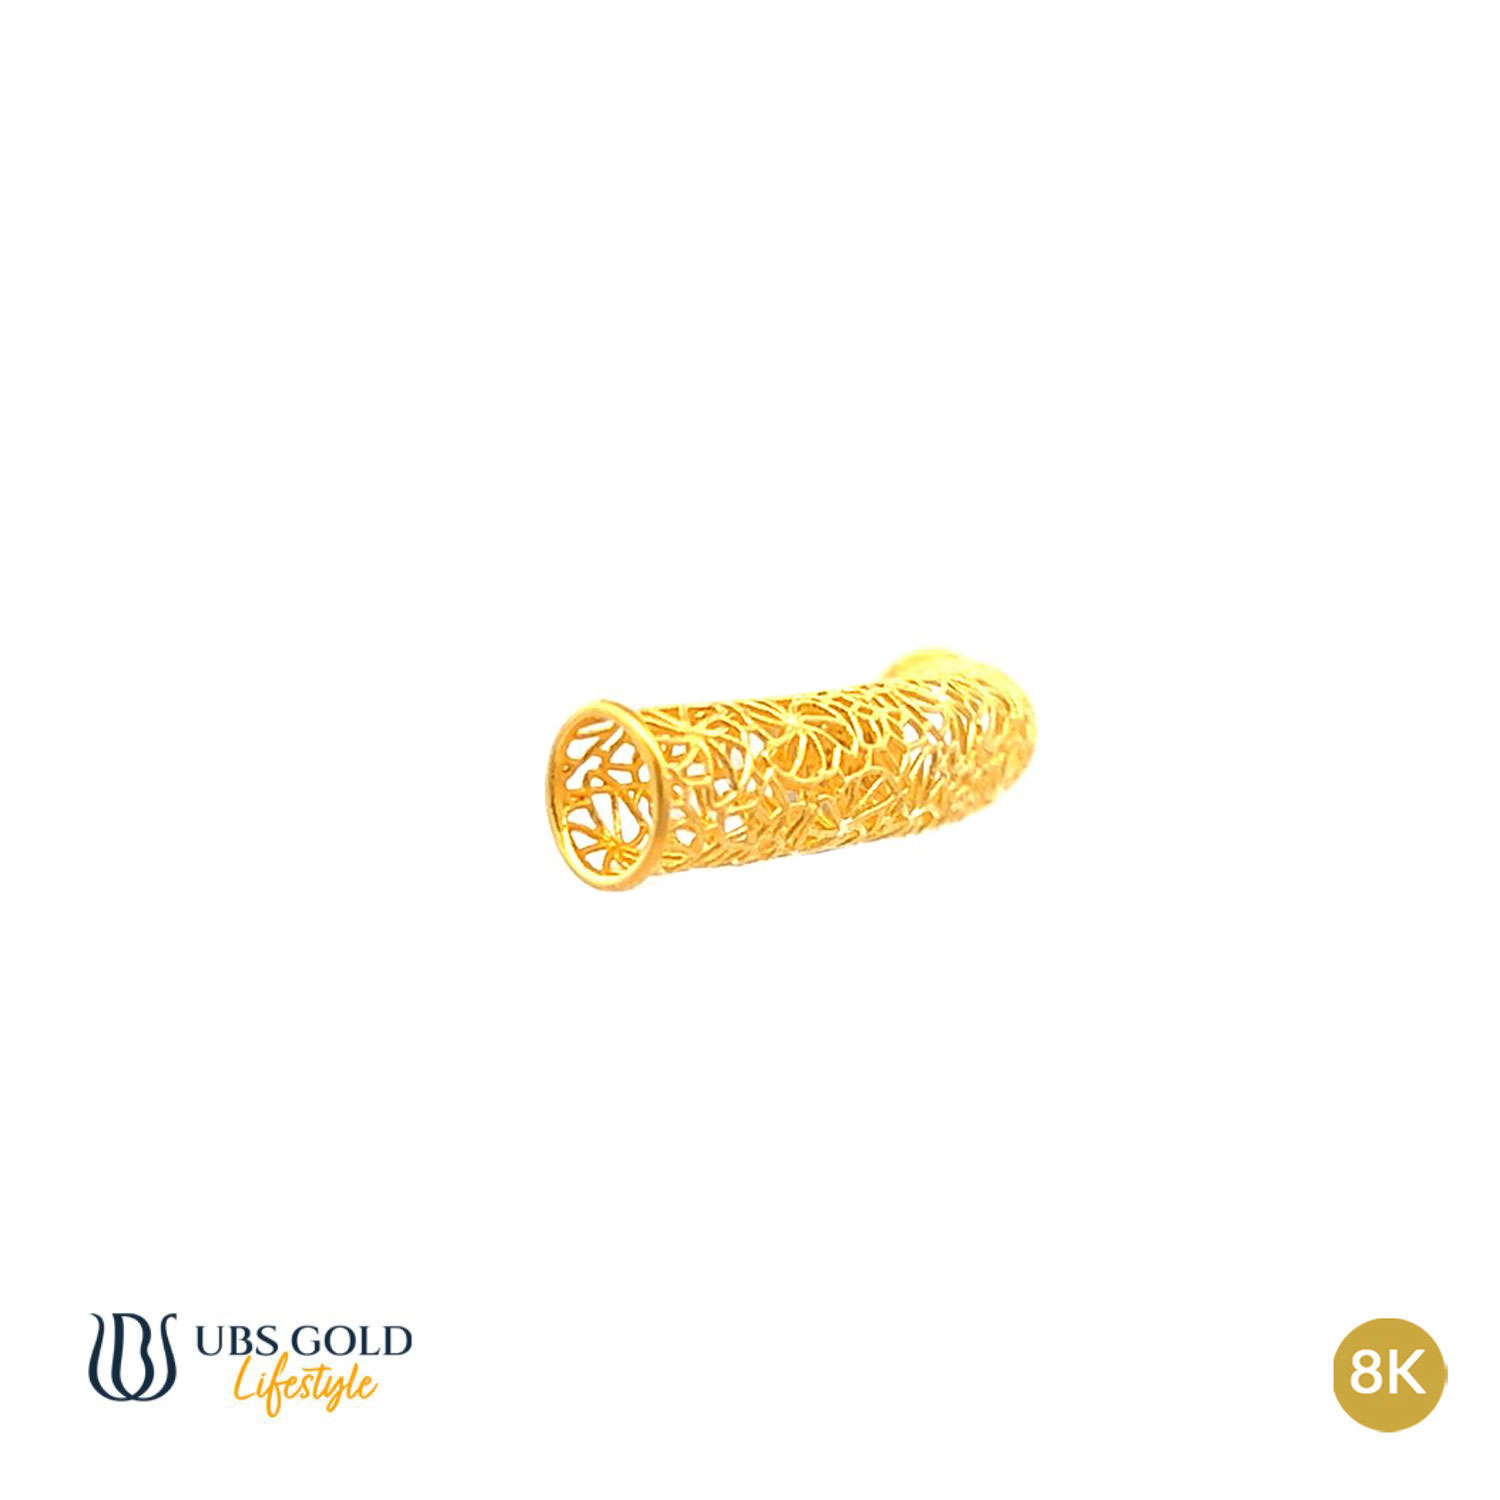 UBS Gold Liontin Emas Sakura - Cdm0004 - 8K